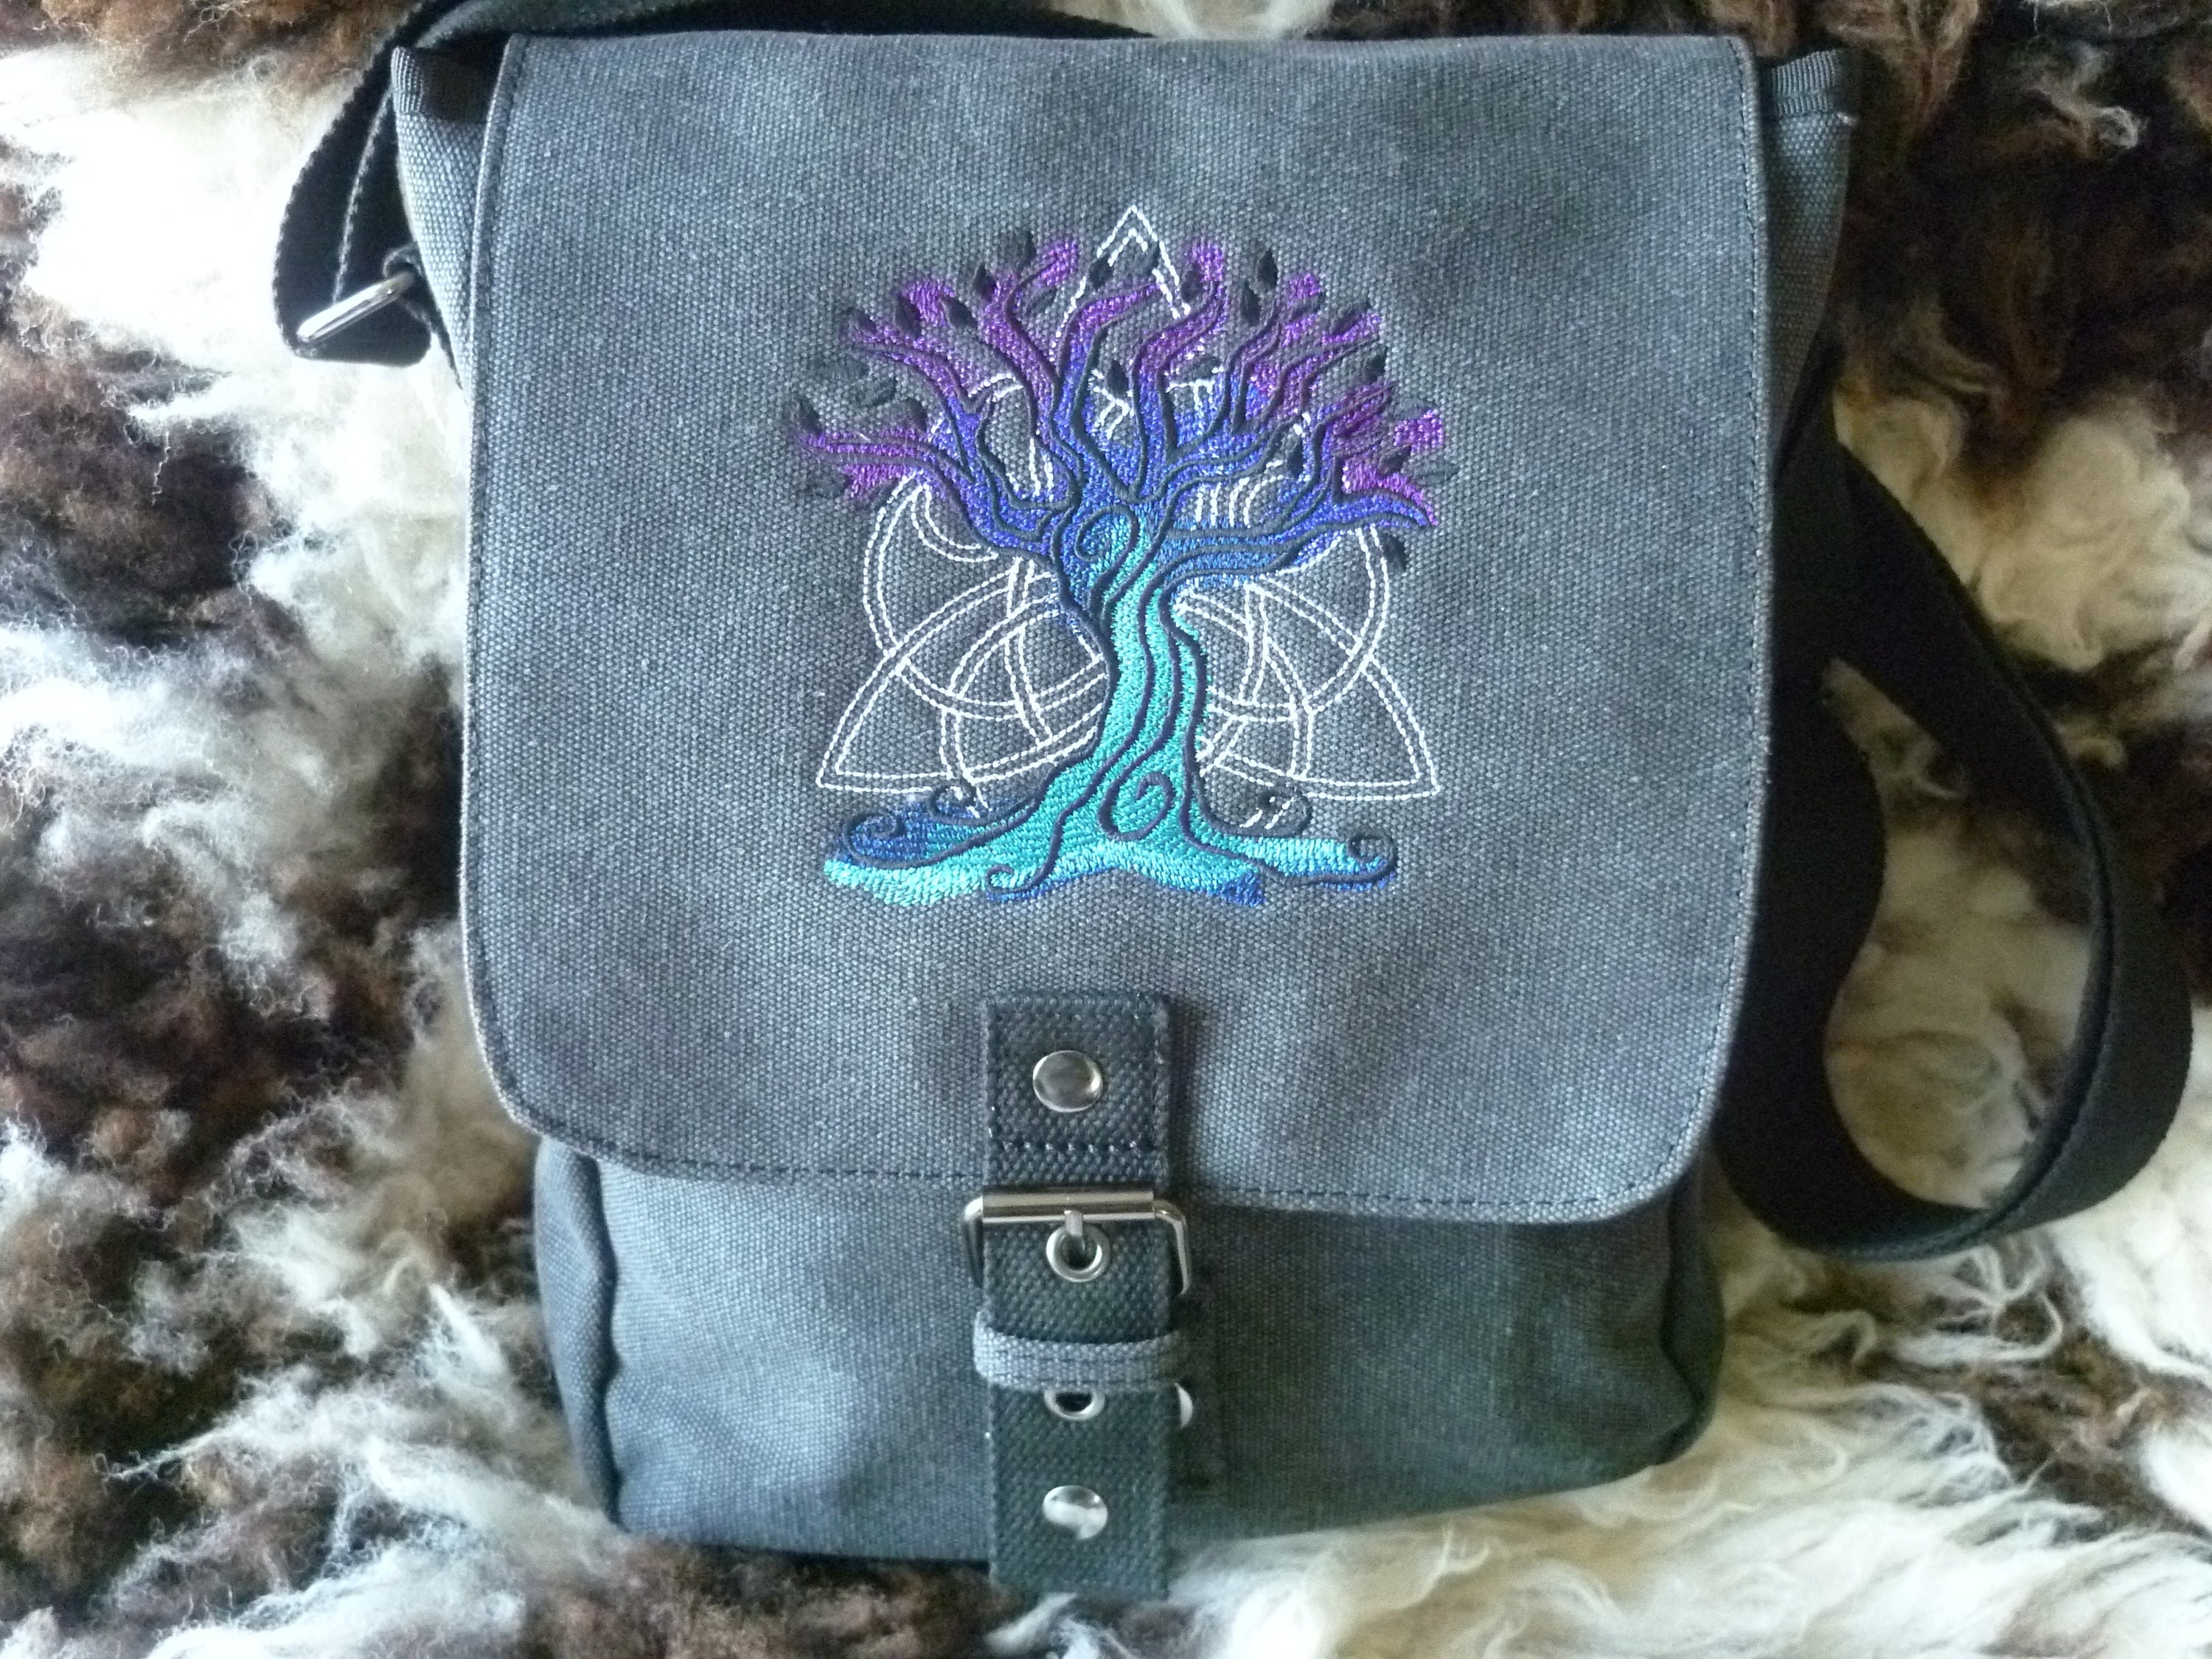 Tree of Life Shoulder Canvas Bag (54850)